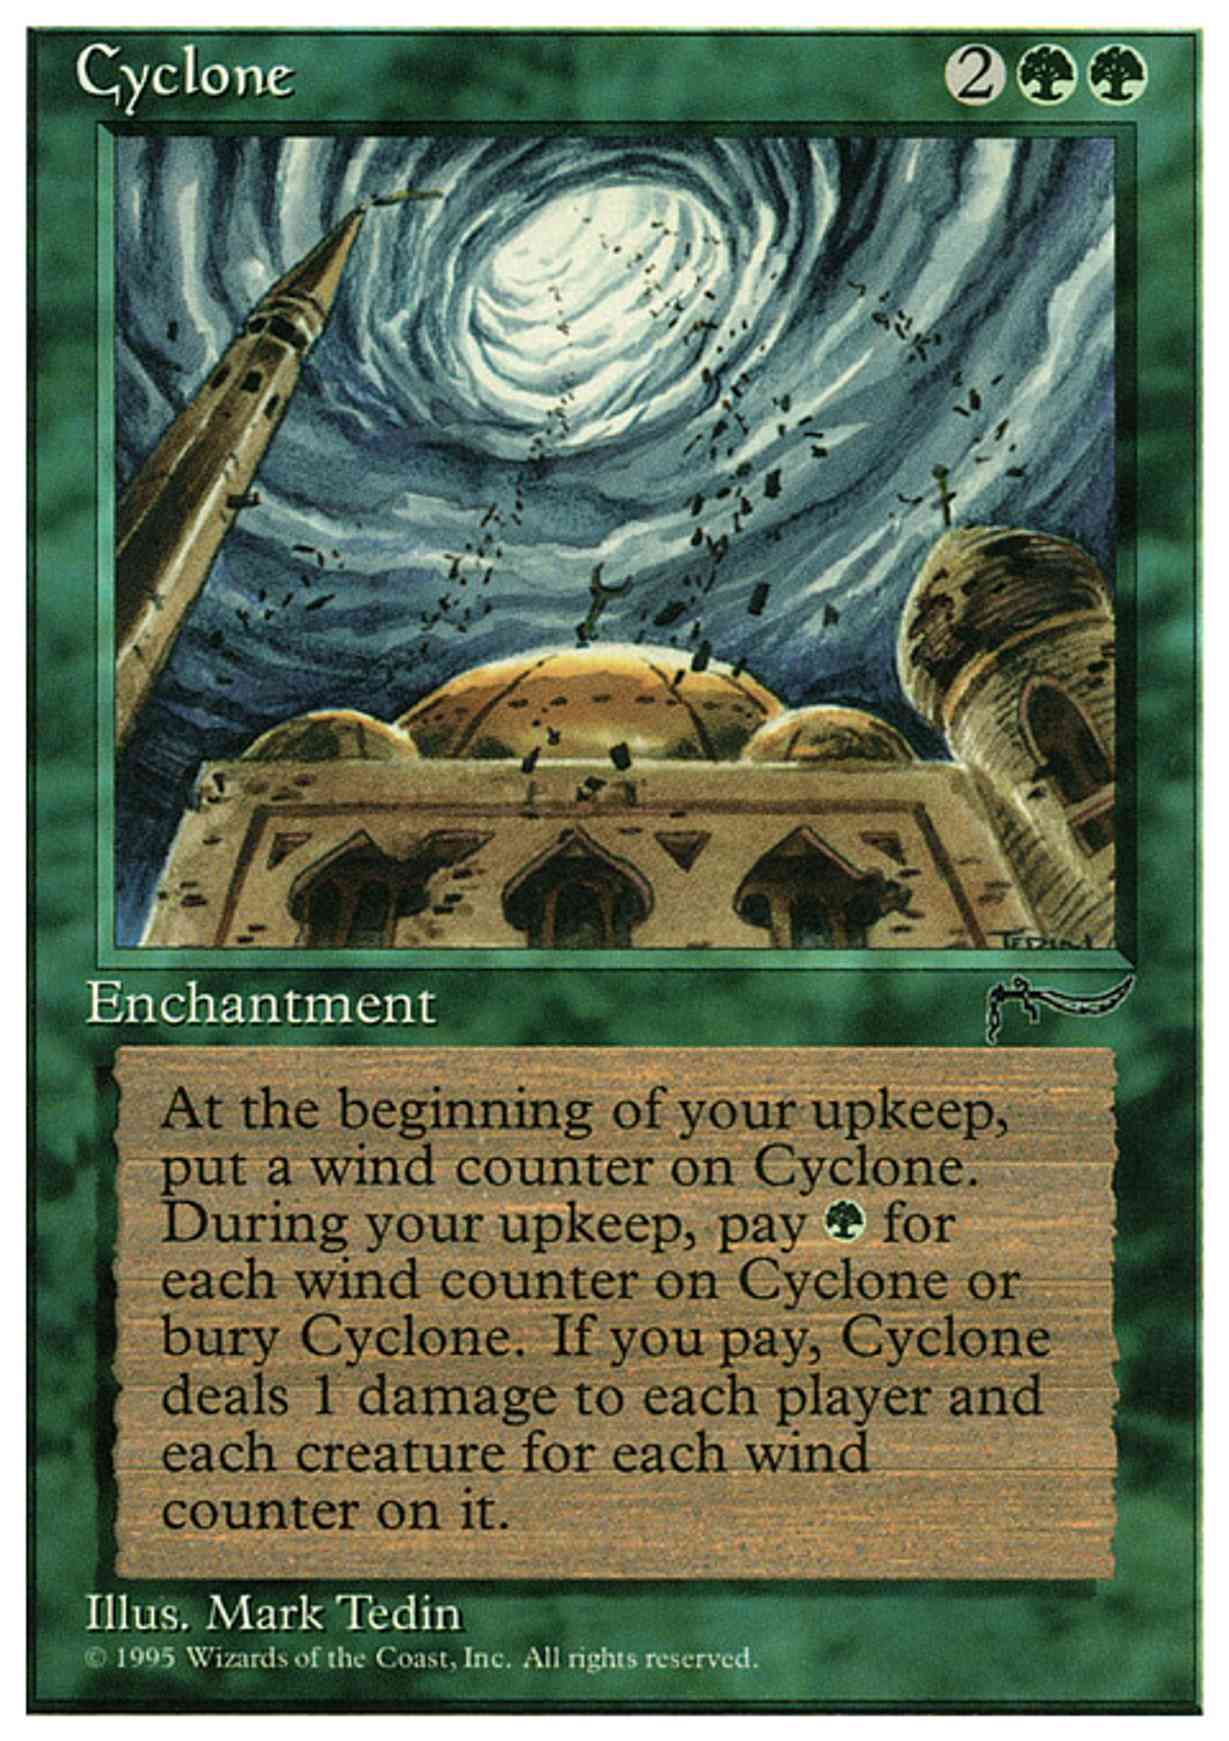 Cyclone magic card front